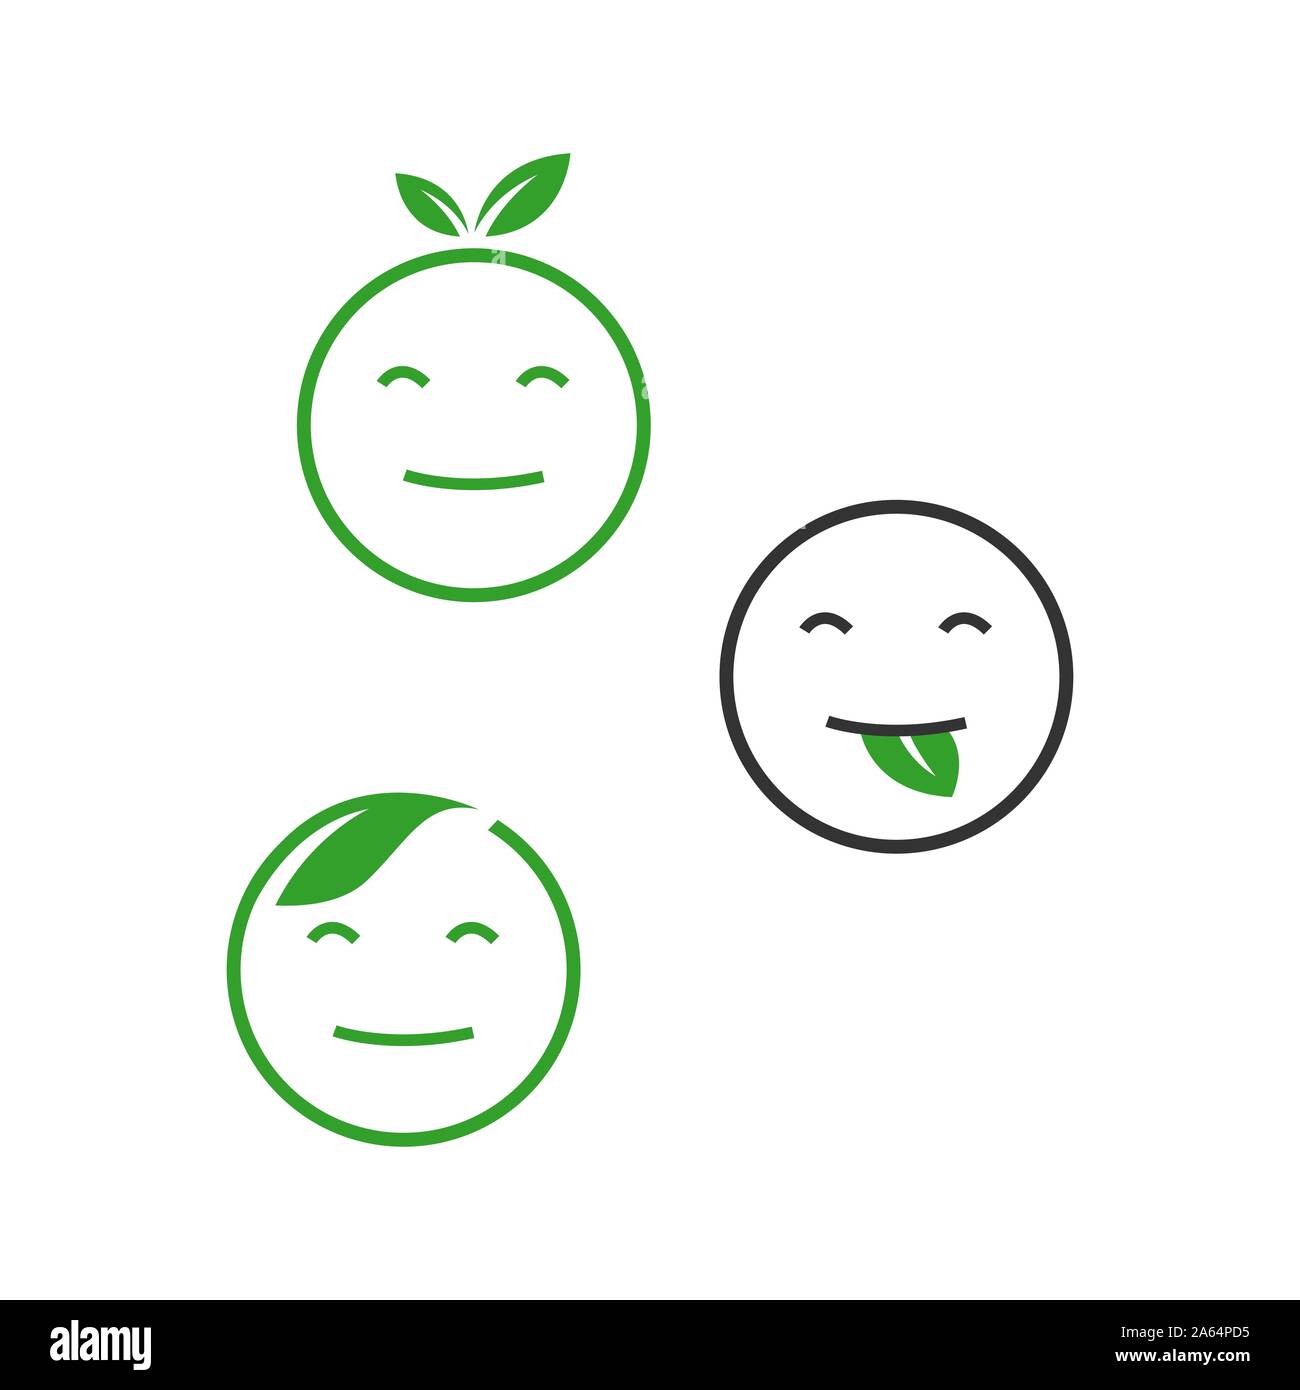 eco green emoticon design vector icon smile face and leaf illustration Stock Vector